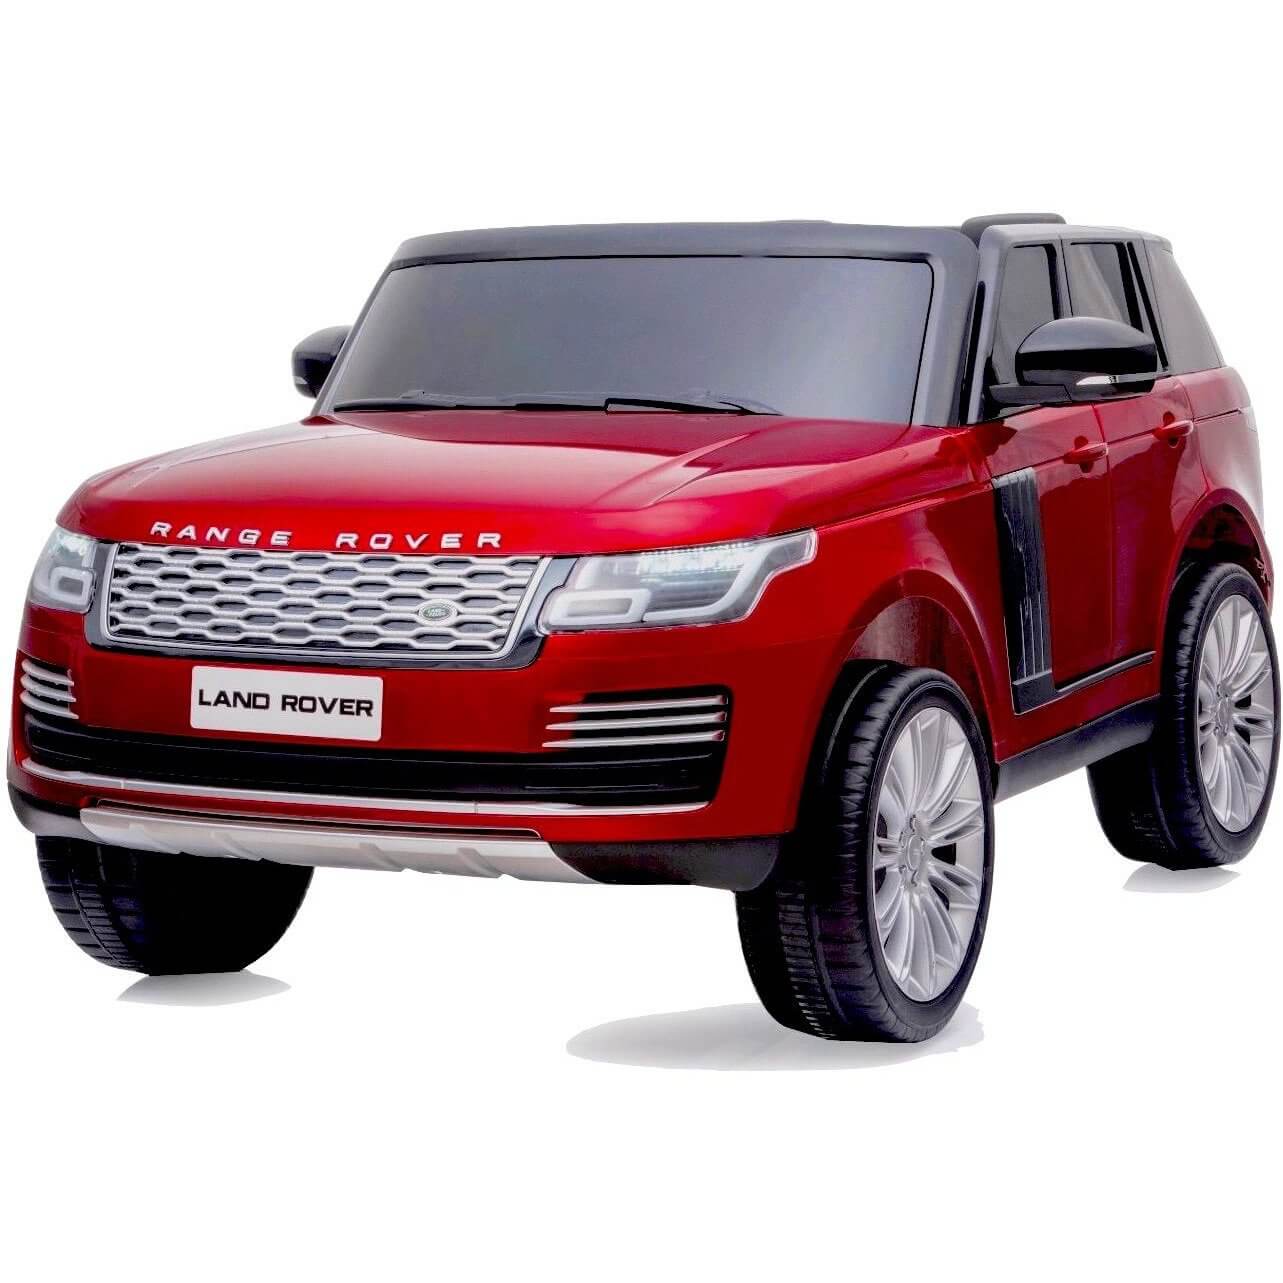 Red Licensed Toys car Premium Metallic Range Rover Vogue 2 seats for kids 24V